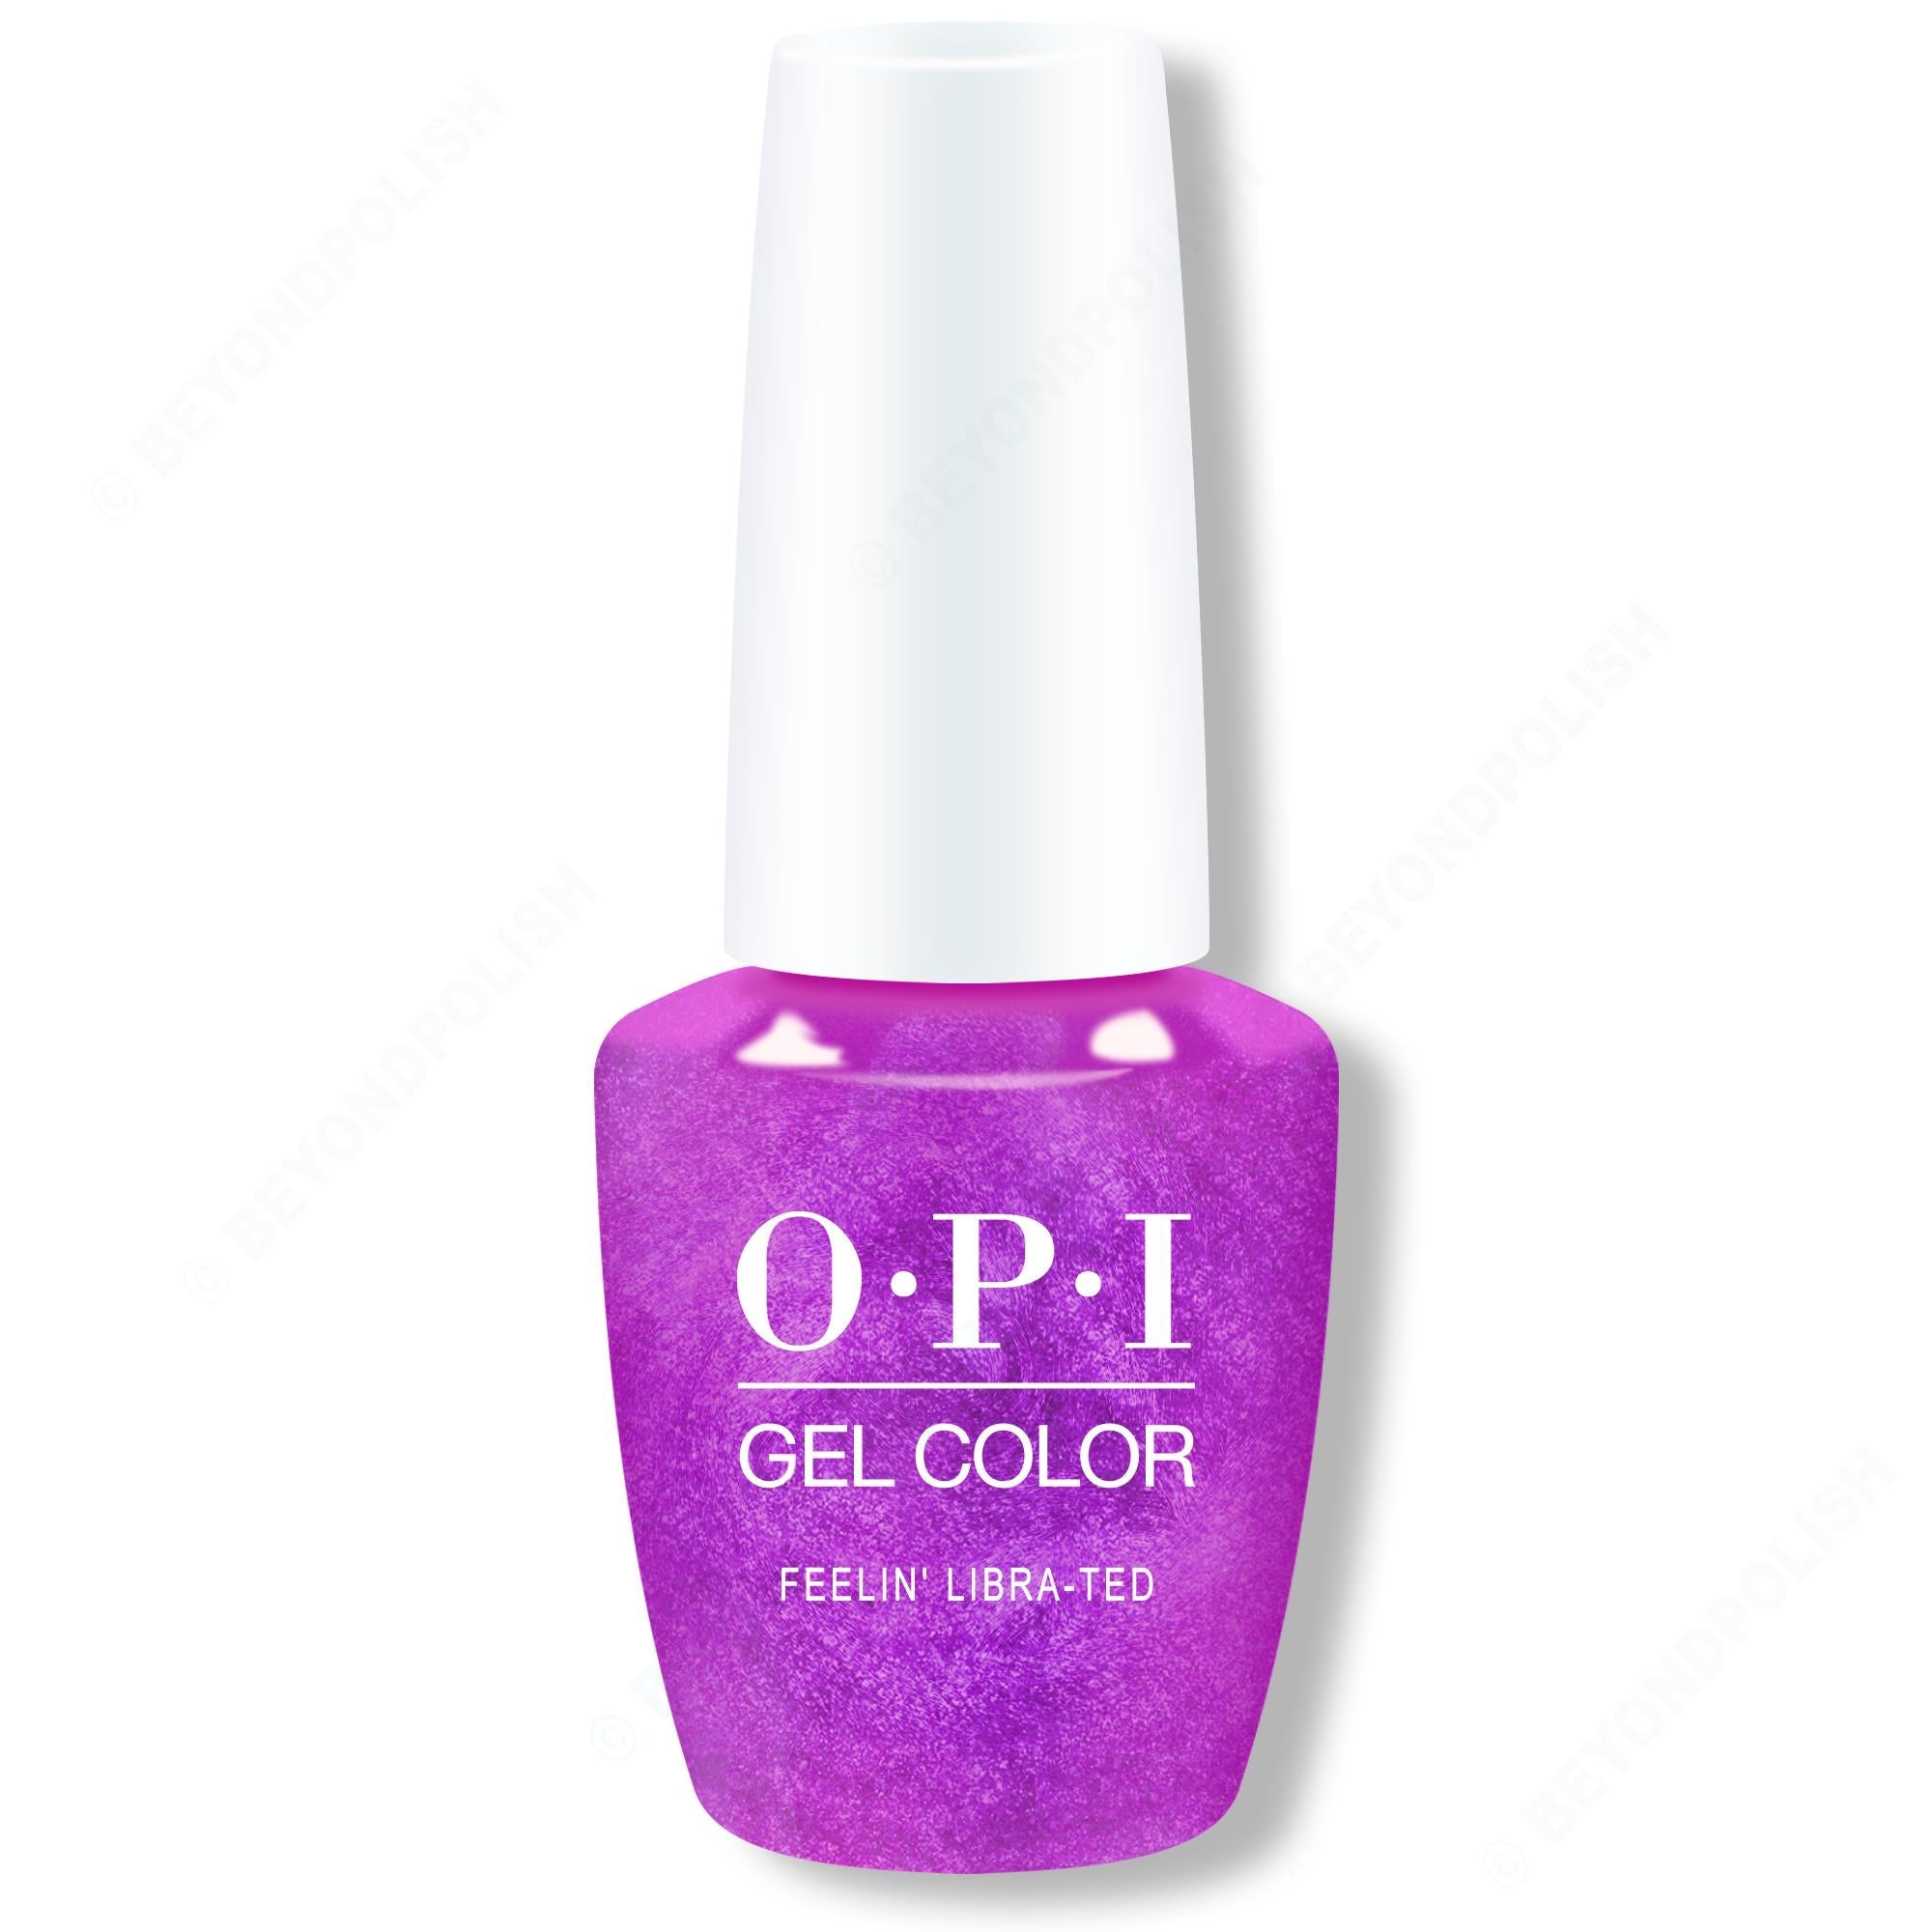 OPI Gel Color - Feelin' Libra-ted 0.5 oz - #GCH020